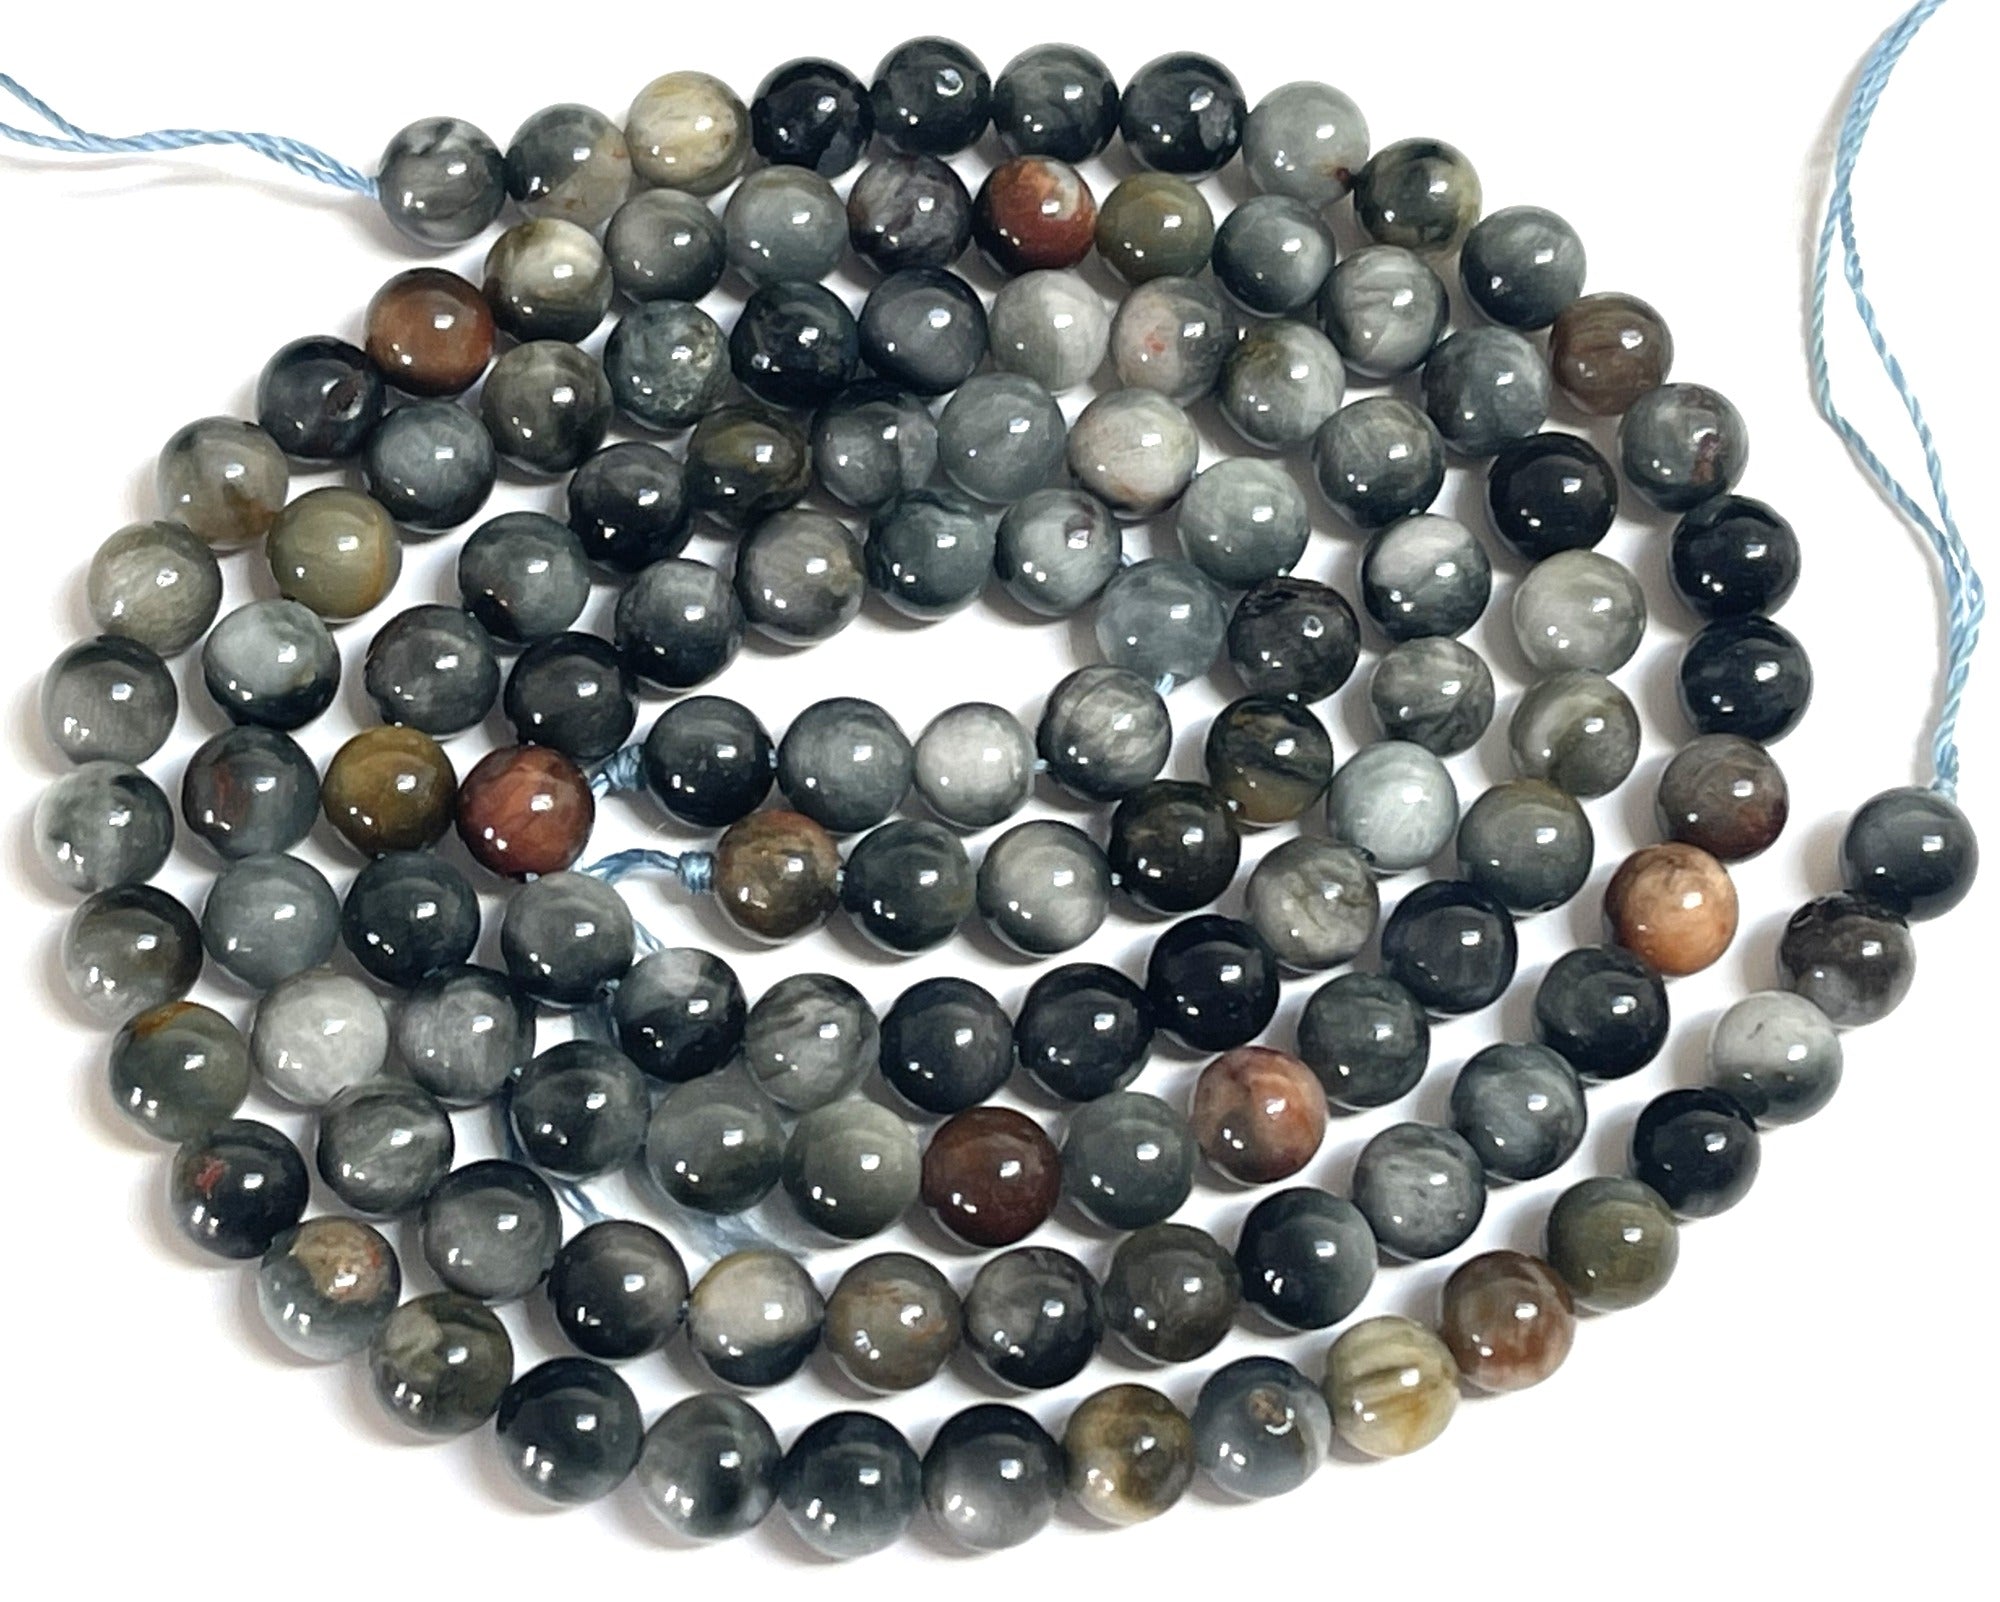 Eagle Eye 6mm round natural gemstone beads 15.5" strand